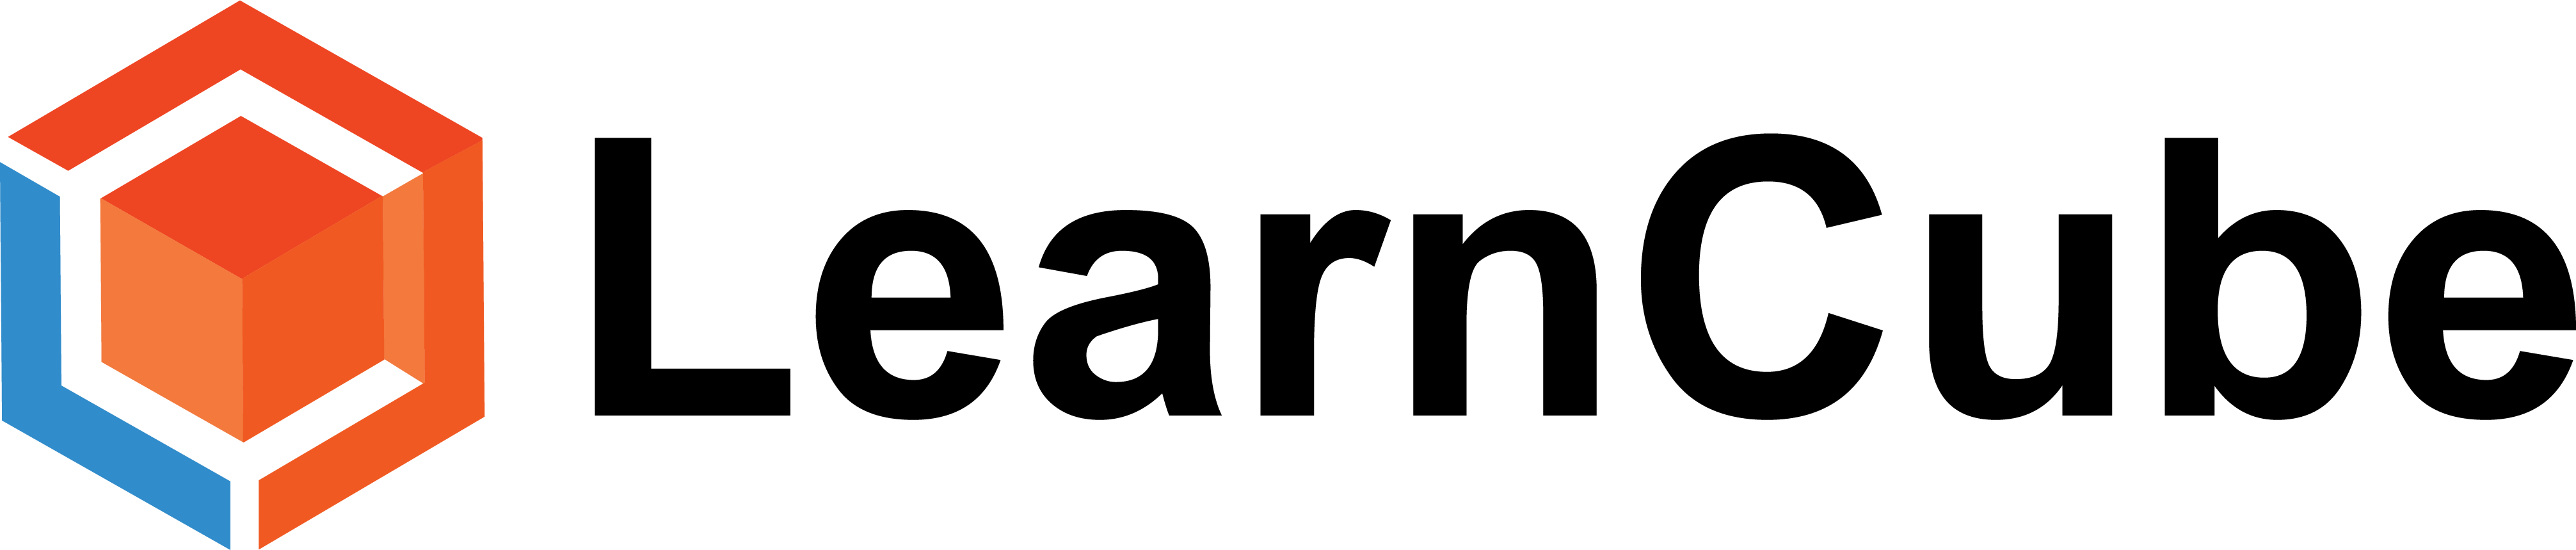 LearnCube logo wordmark -high res